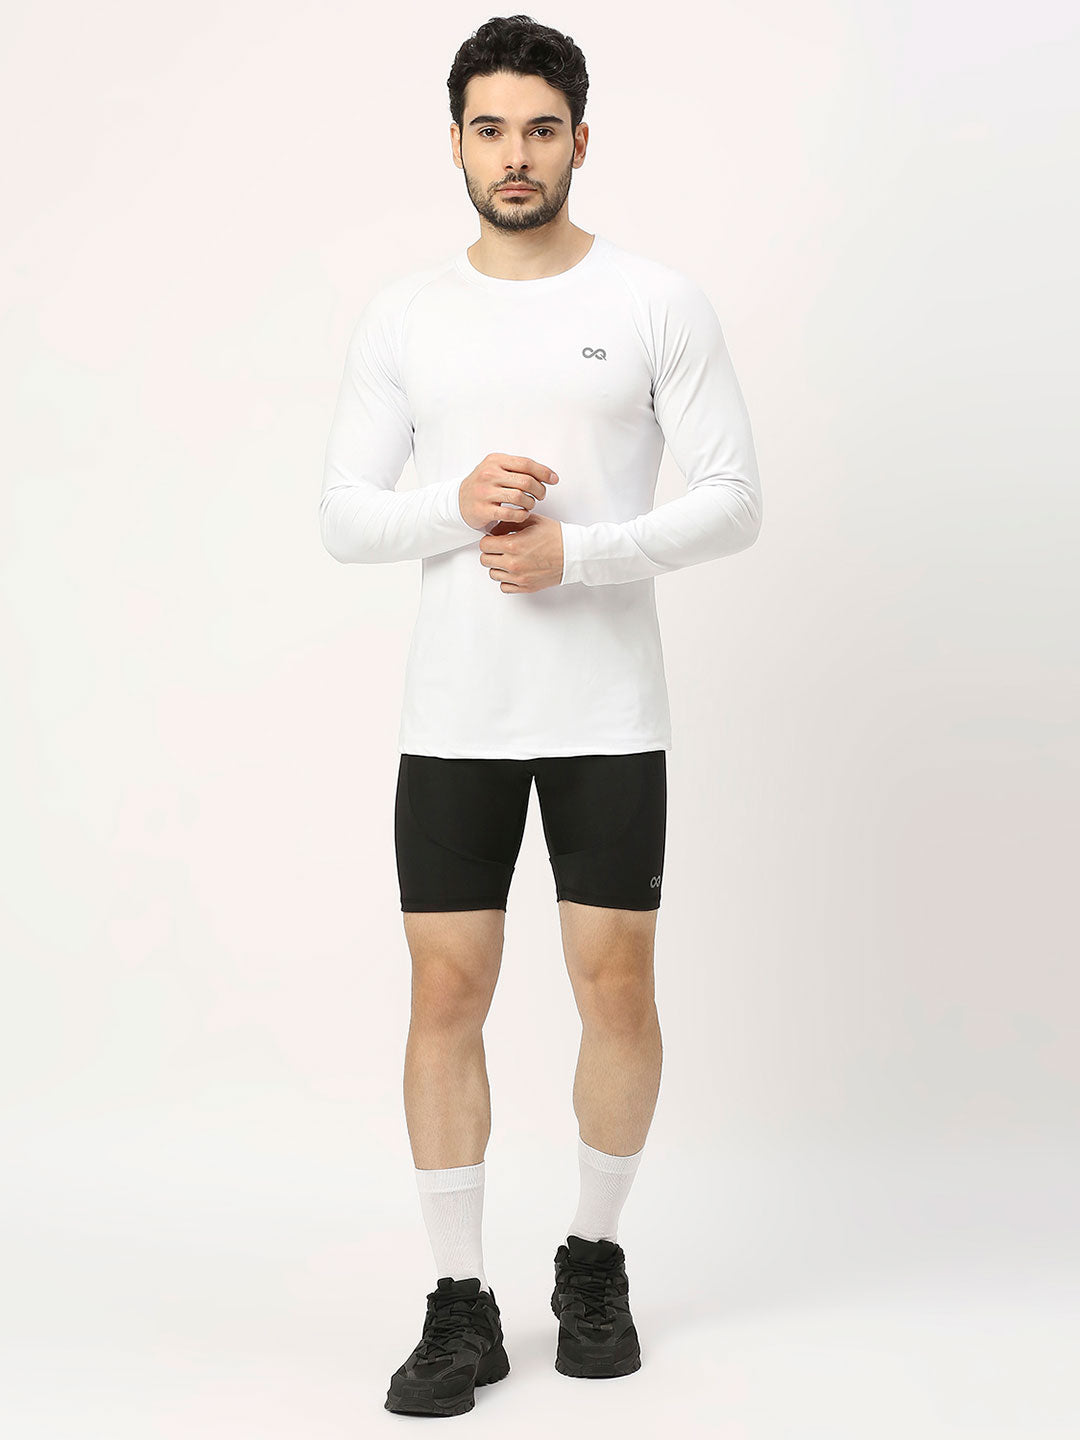 Men's Compression Shorts - Black